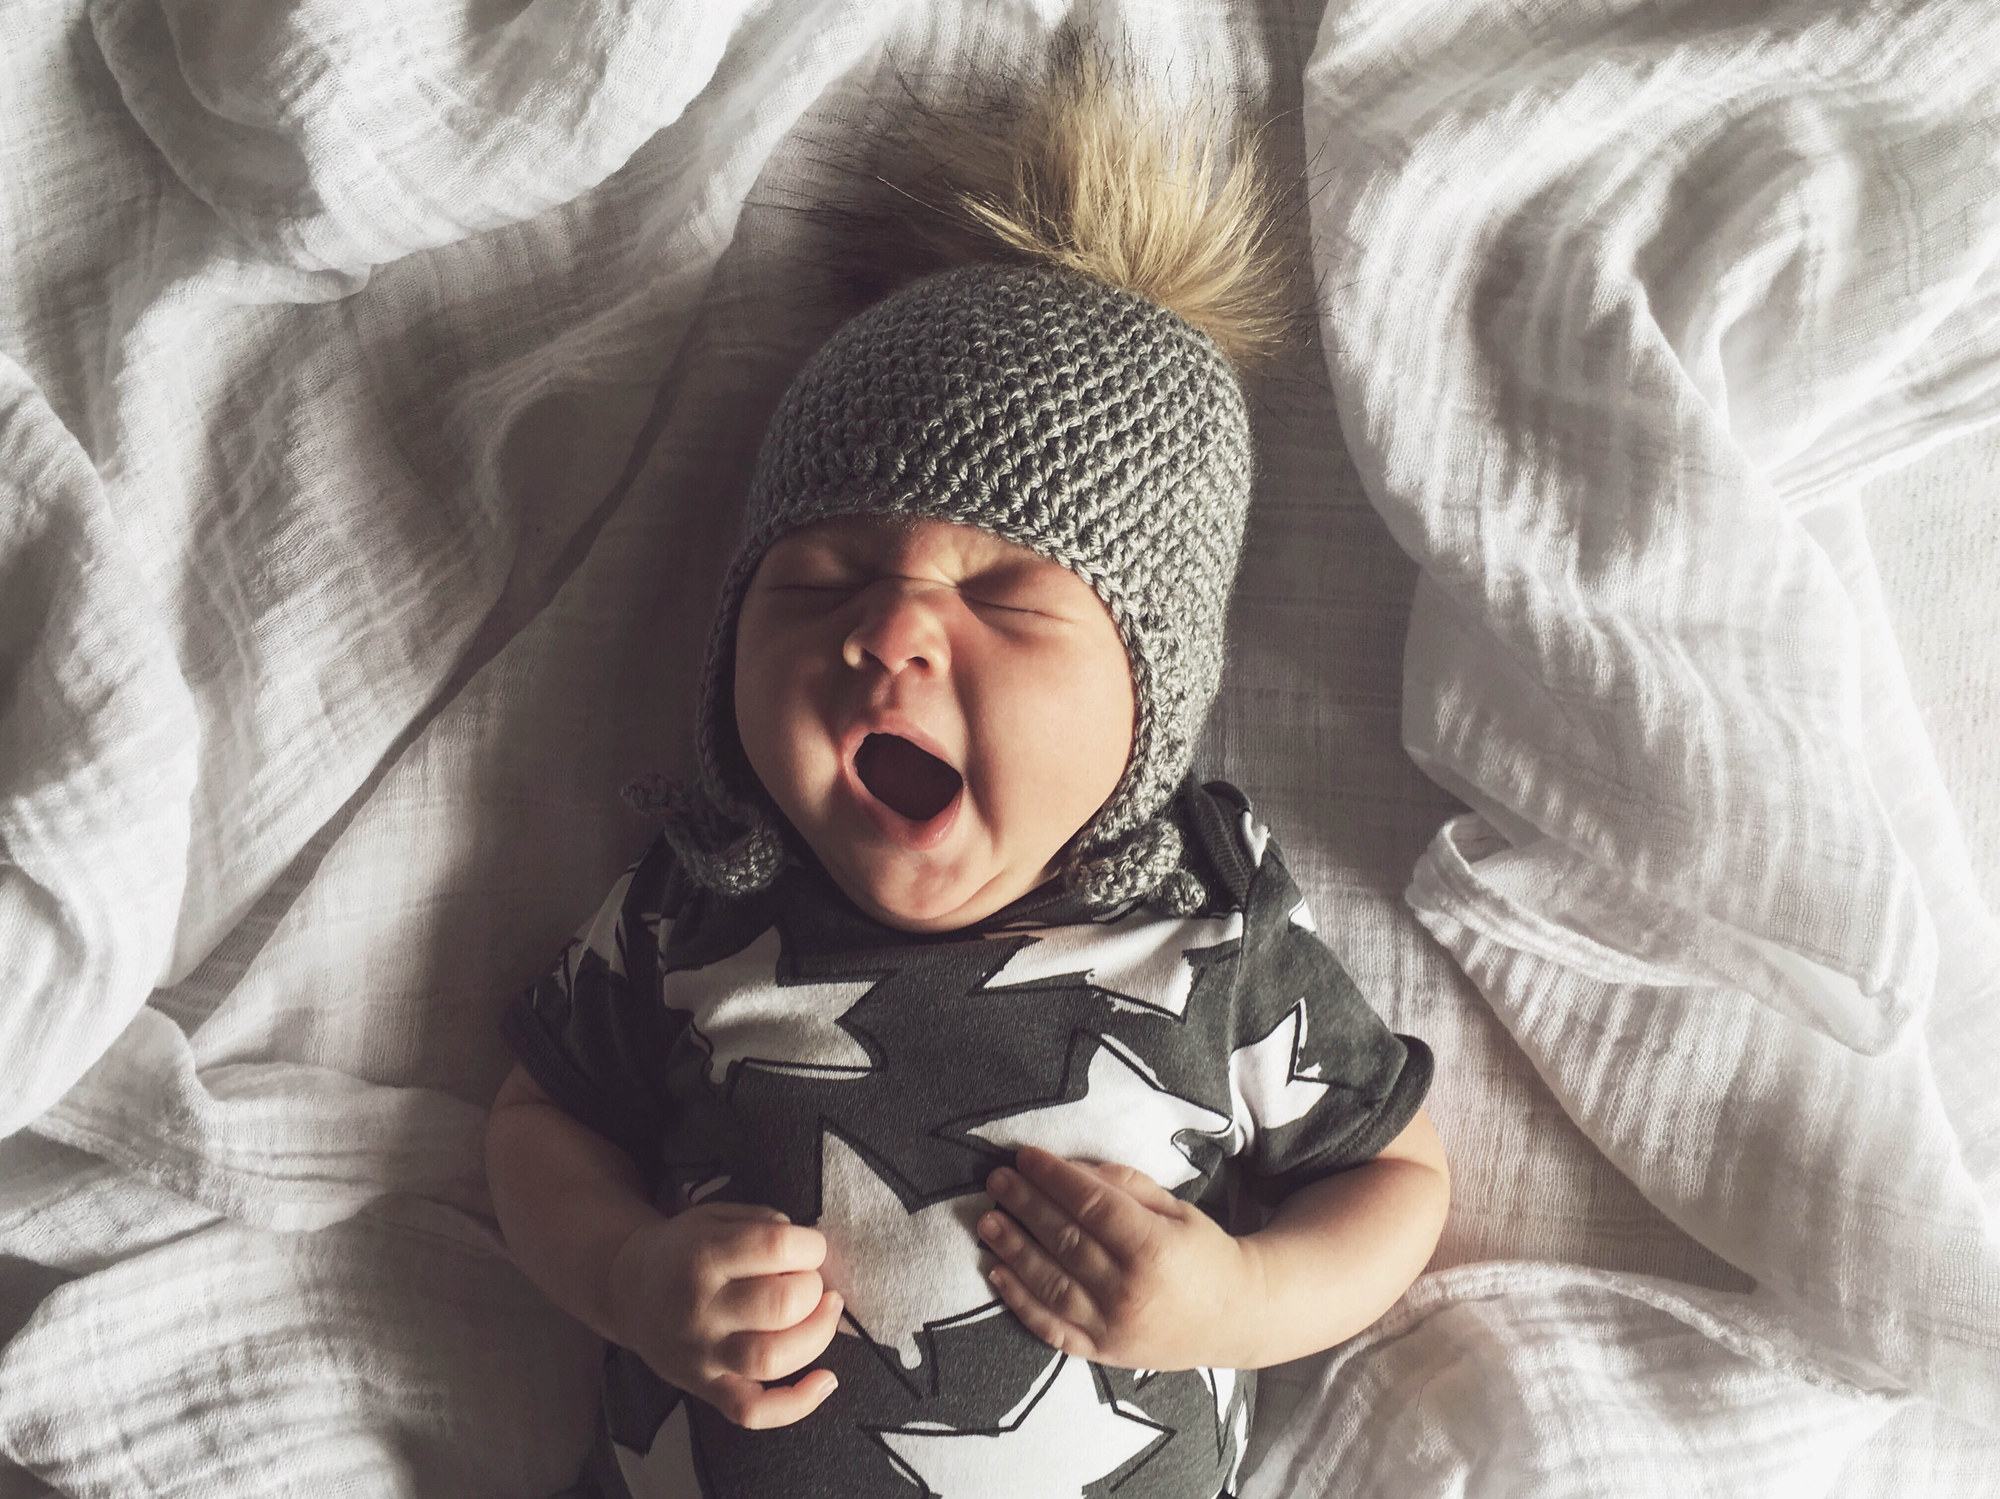 Infant waking up yawning after a big sleep